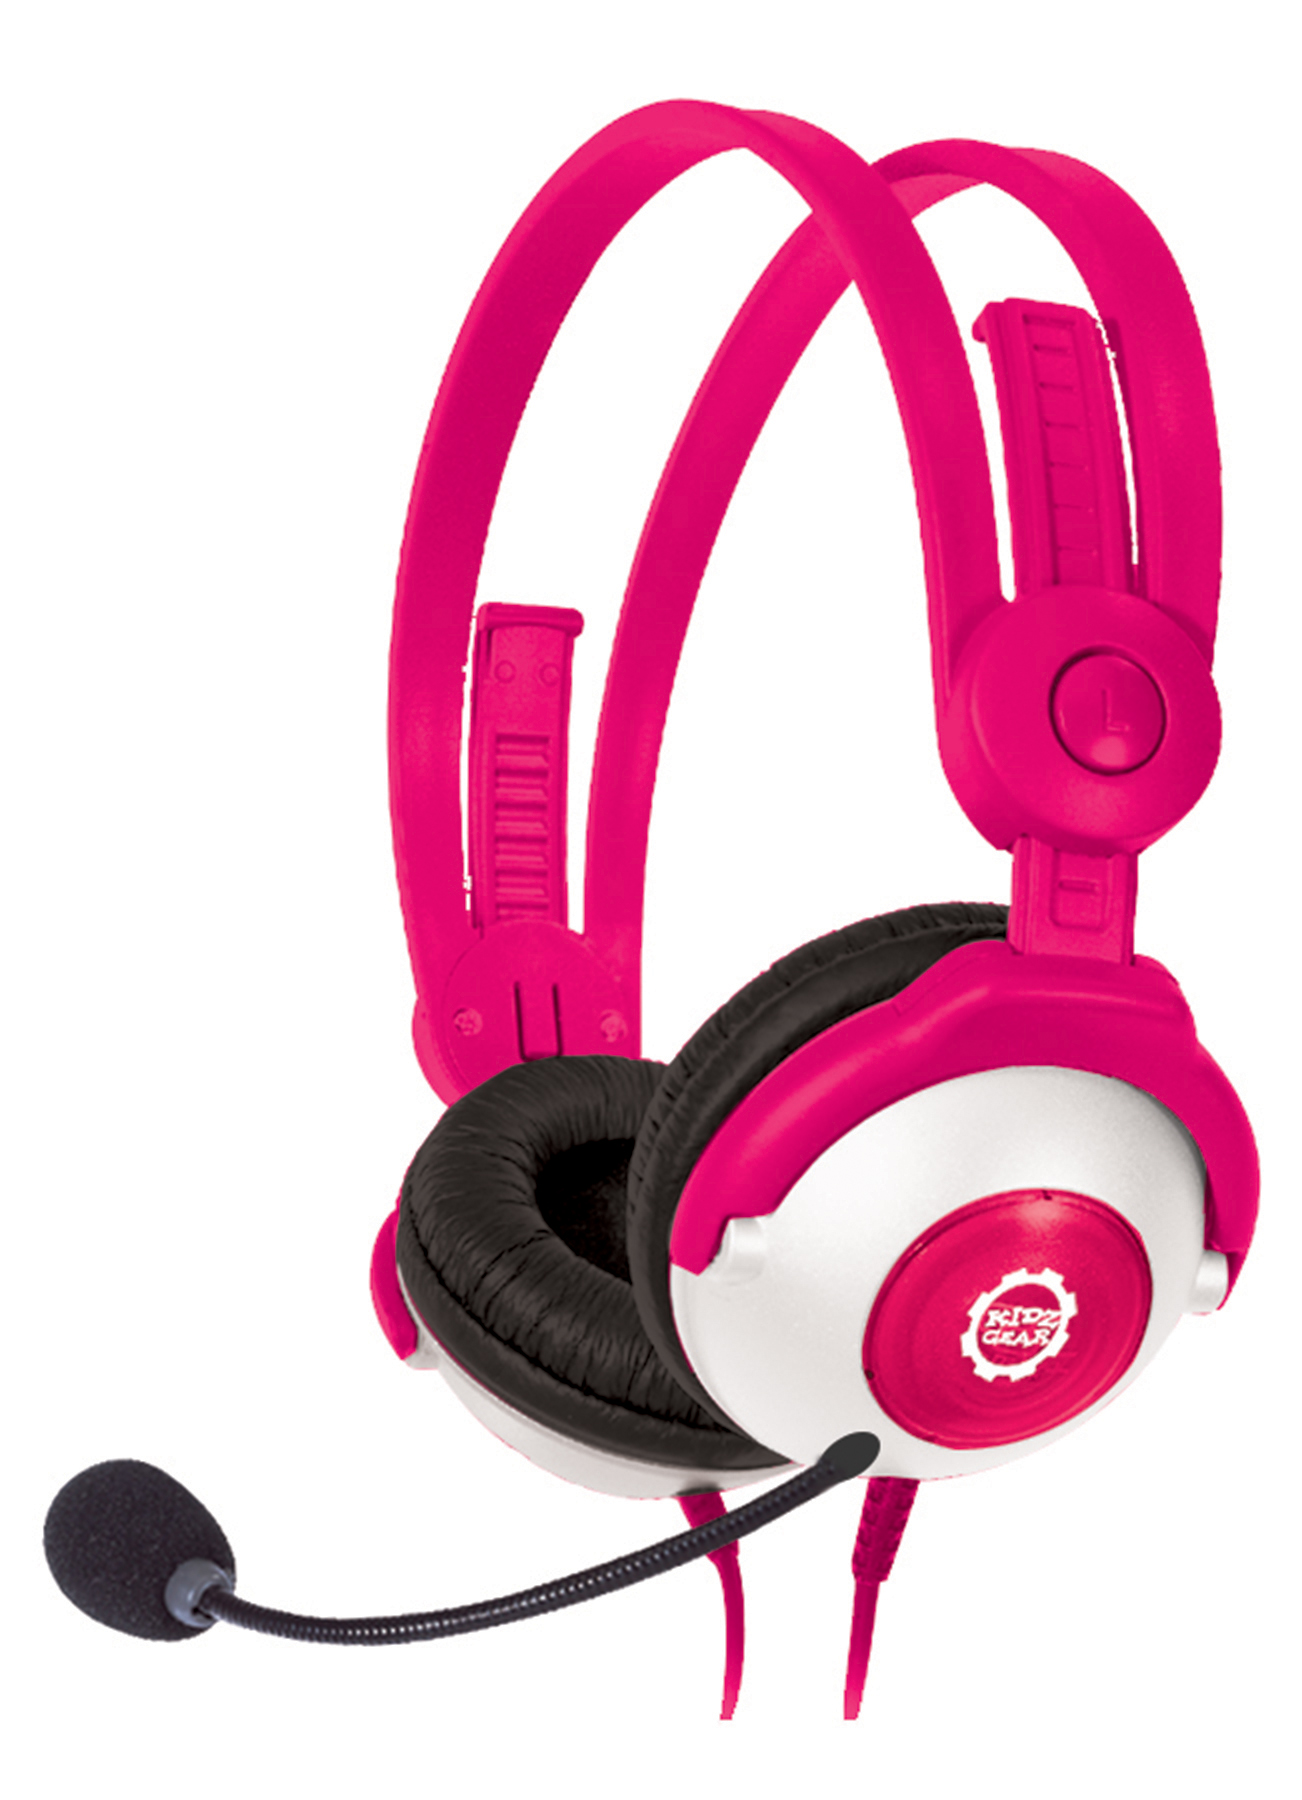 Kidz Gear Deluxe Stereo Headset Headphones with Boom Microphone - Pink